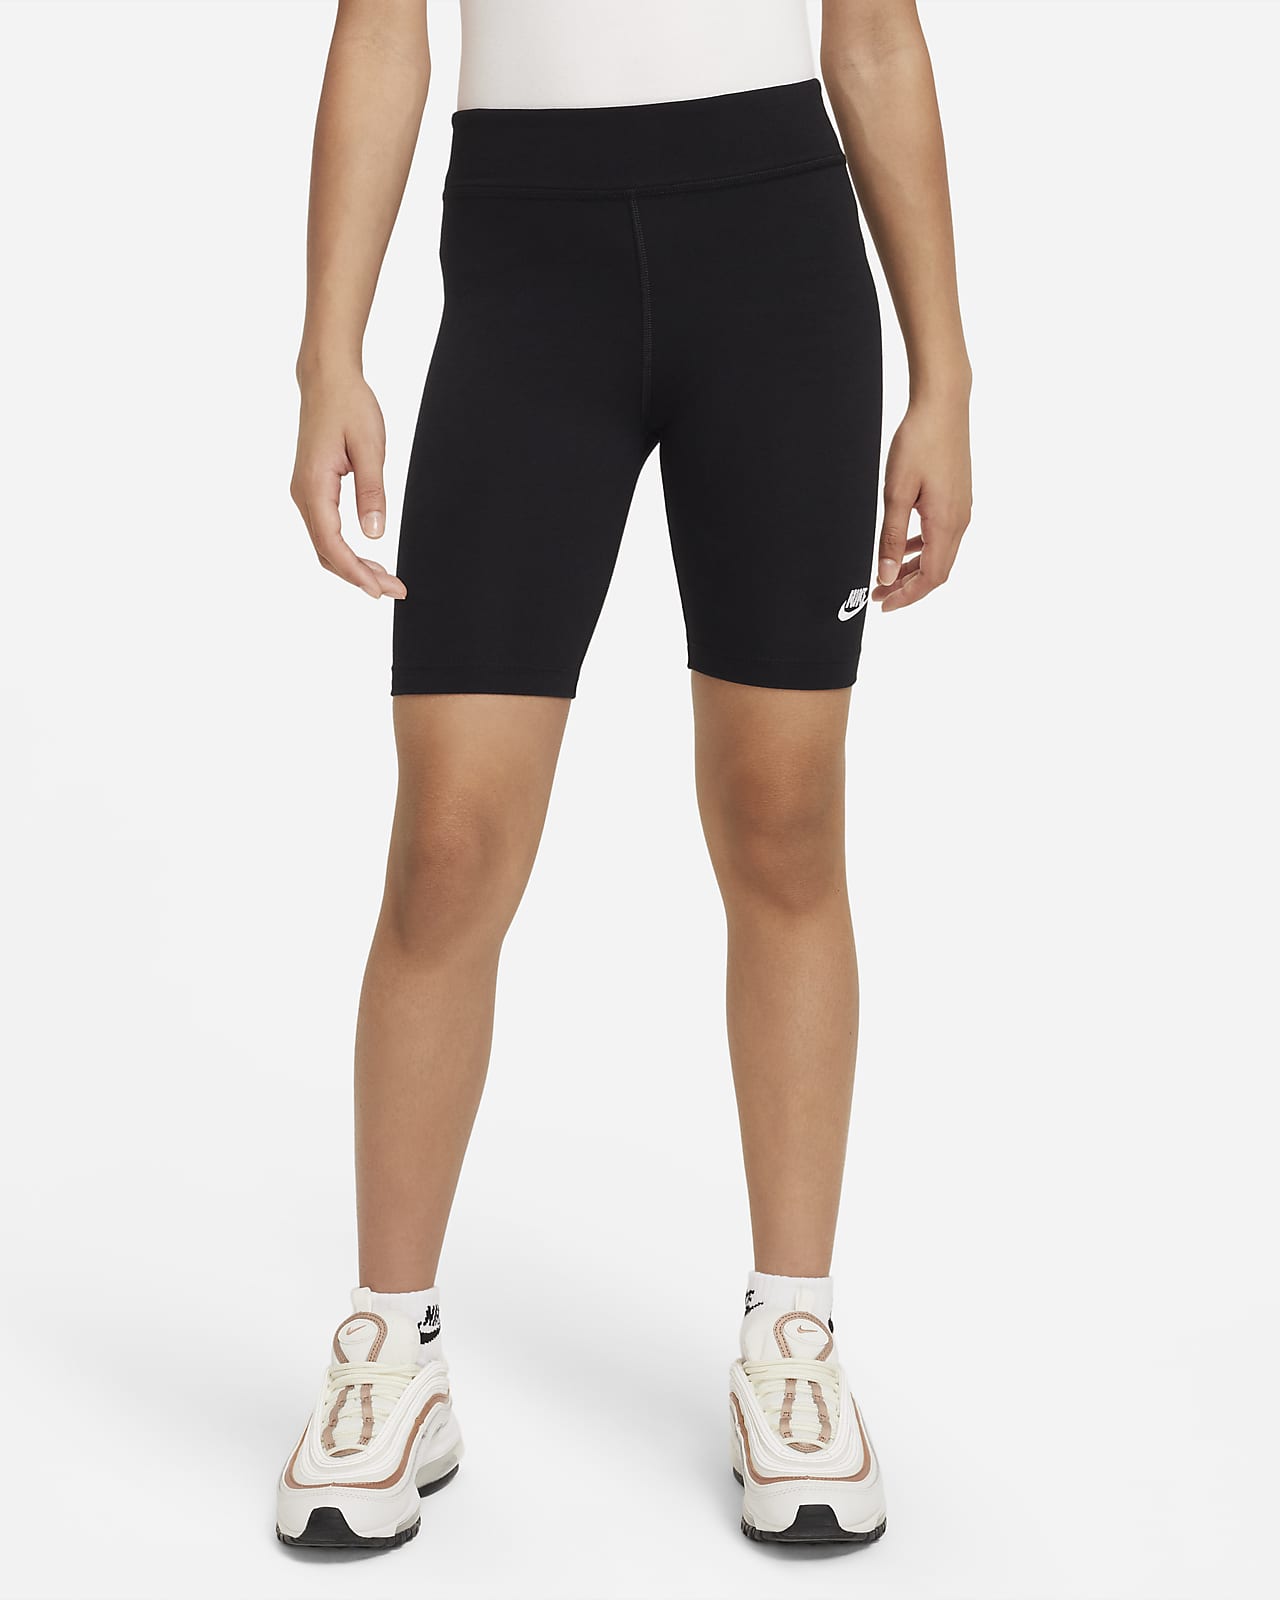 Nike Older Kids' (Girls') 18cm (approx.) Biker Shorts